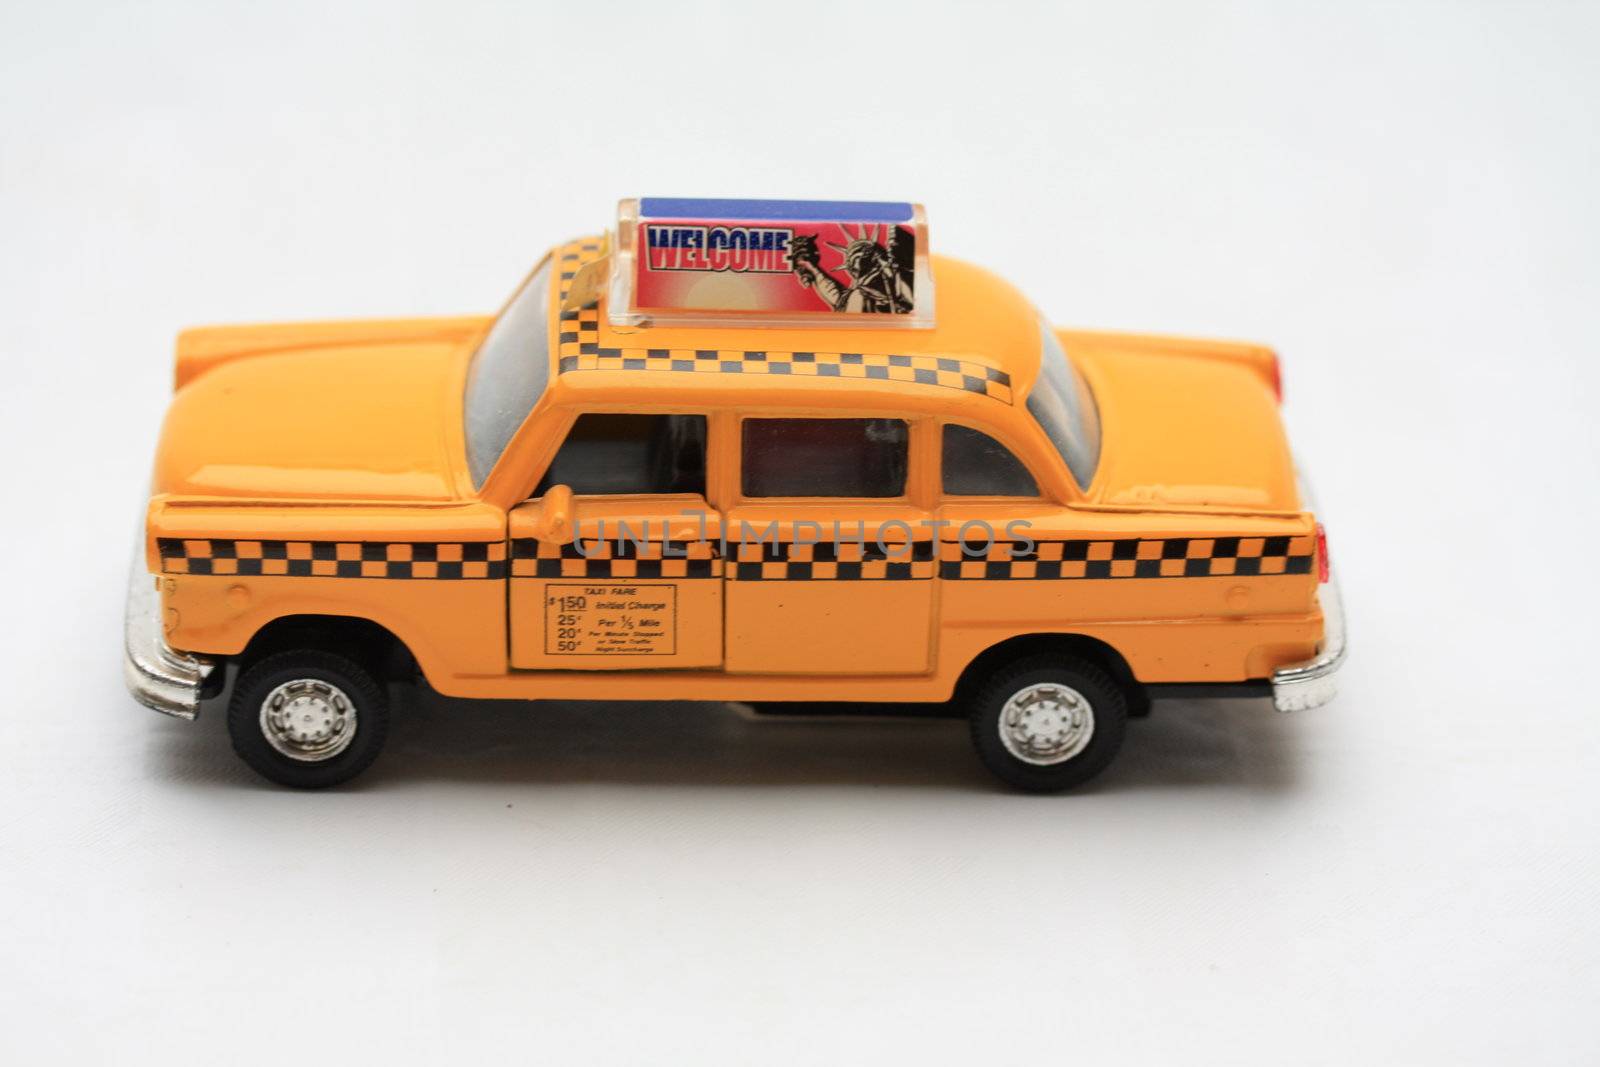 New York yellow cab toy car by studioportosabbia